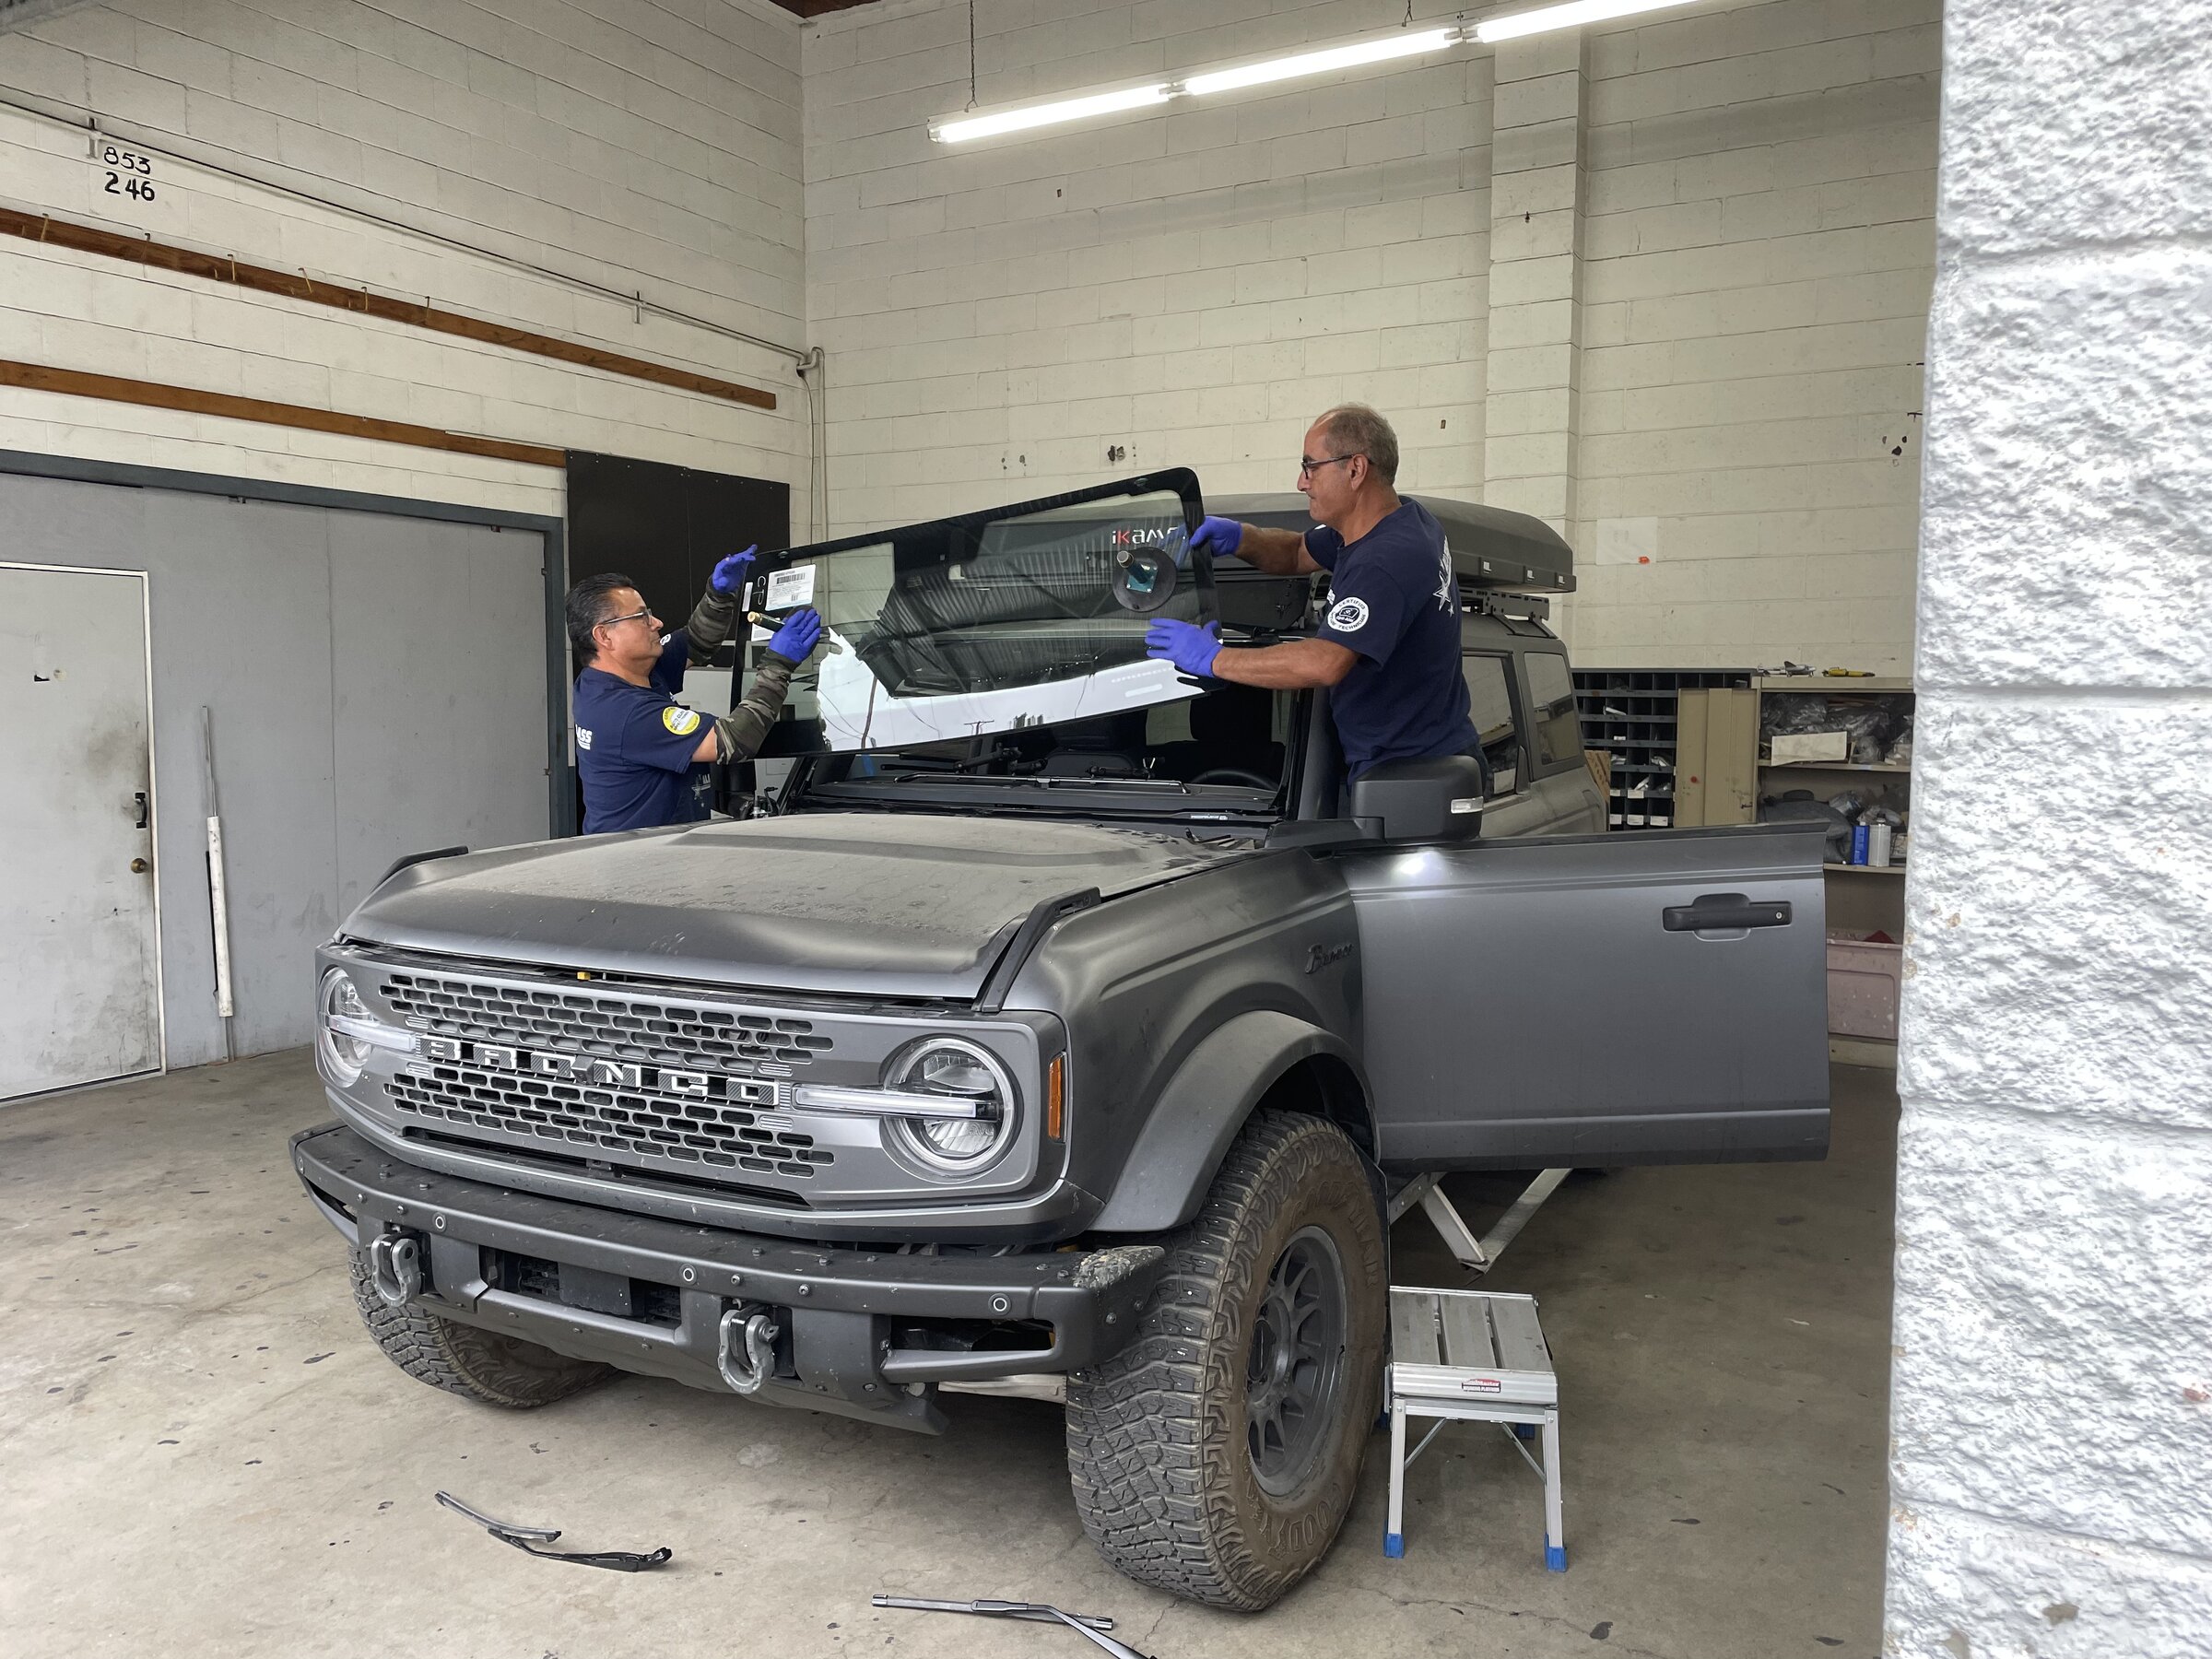 Ford Bronco Project “Terminator Bronco” overland build IMG_0258